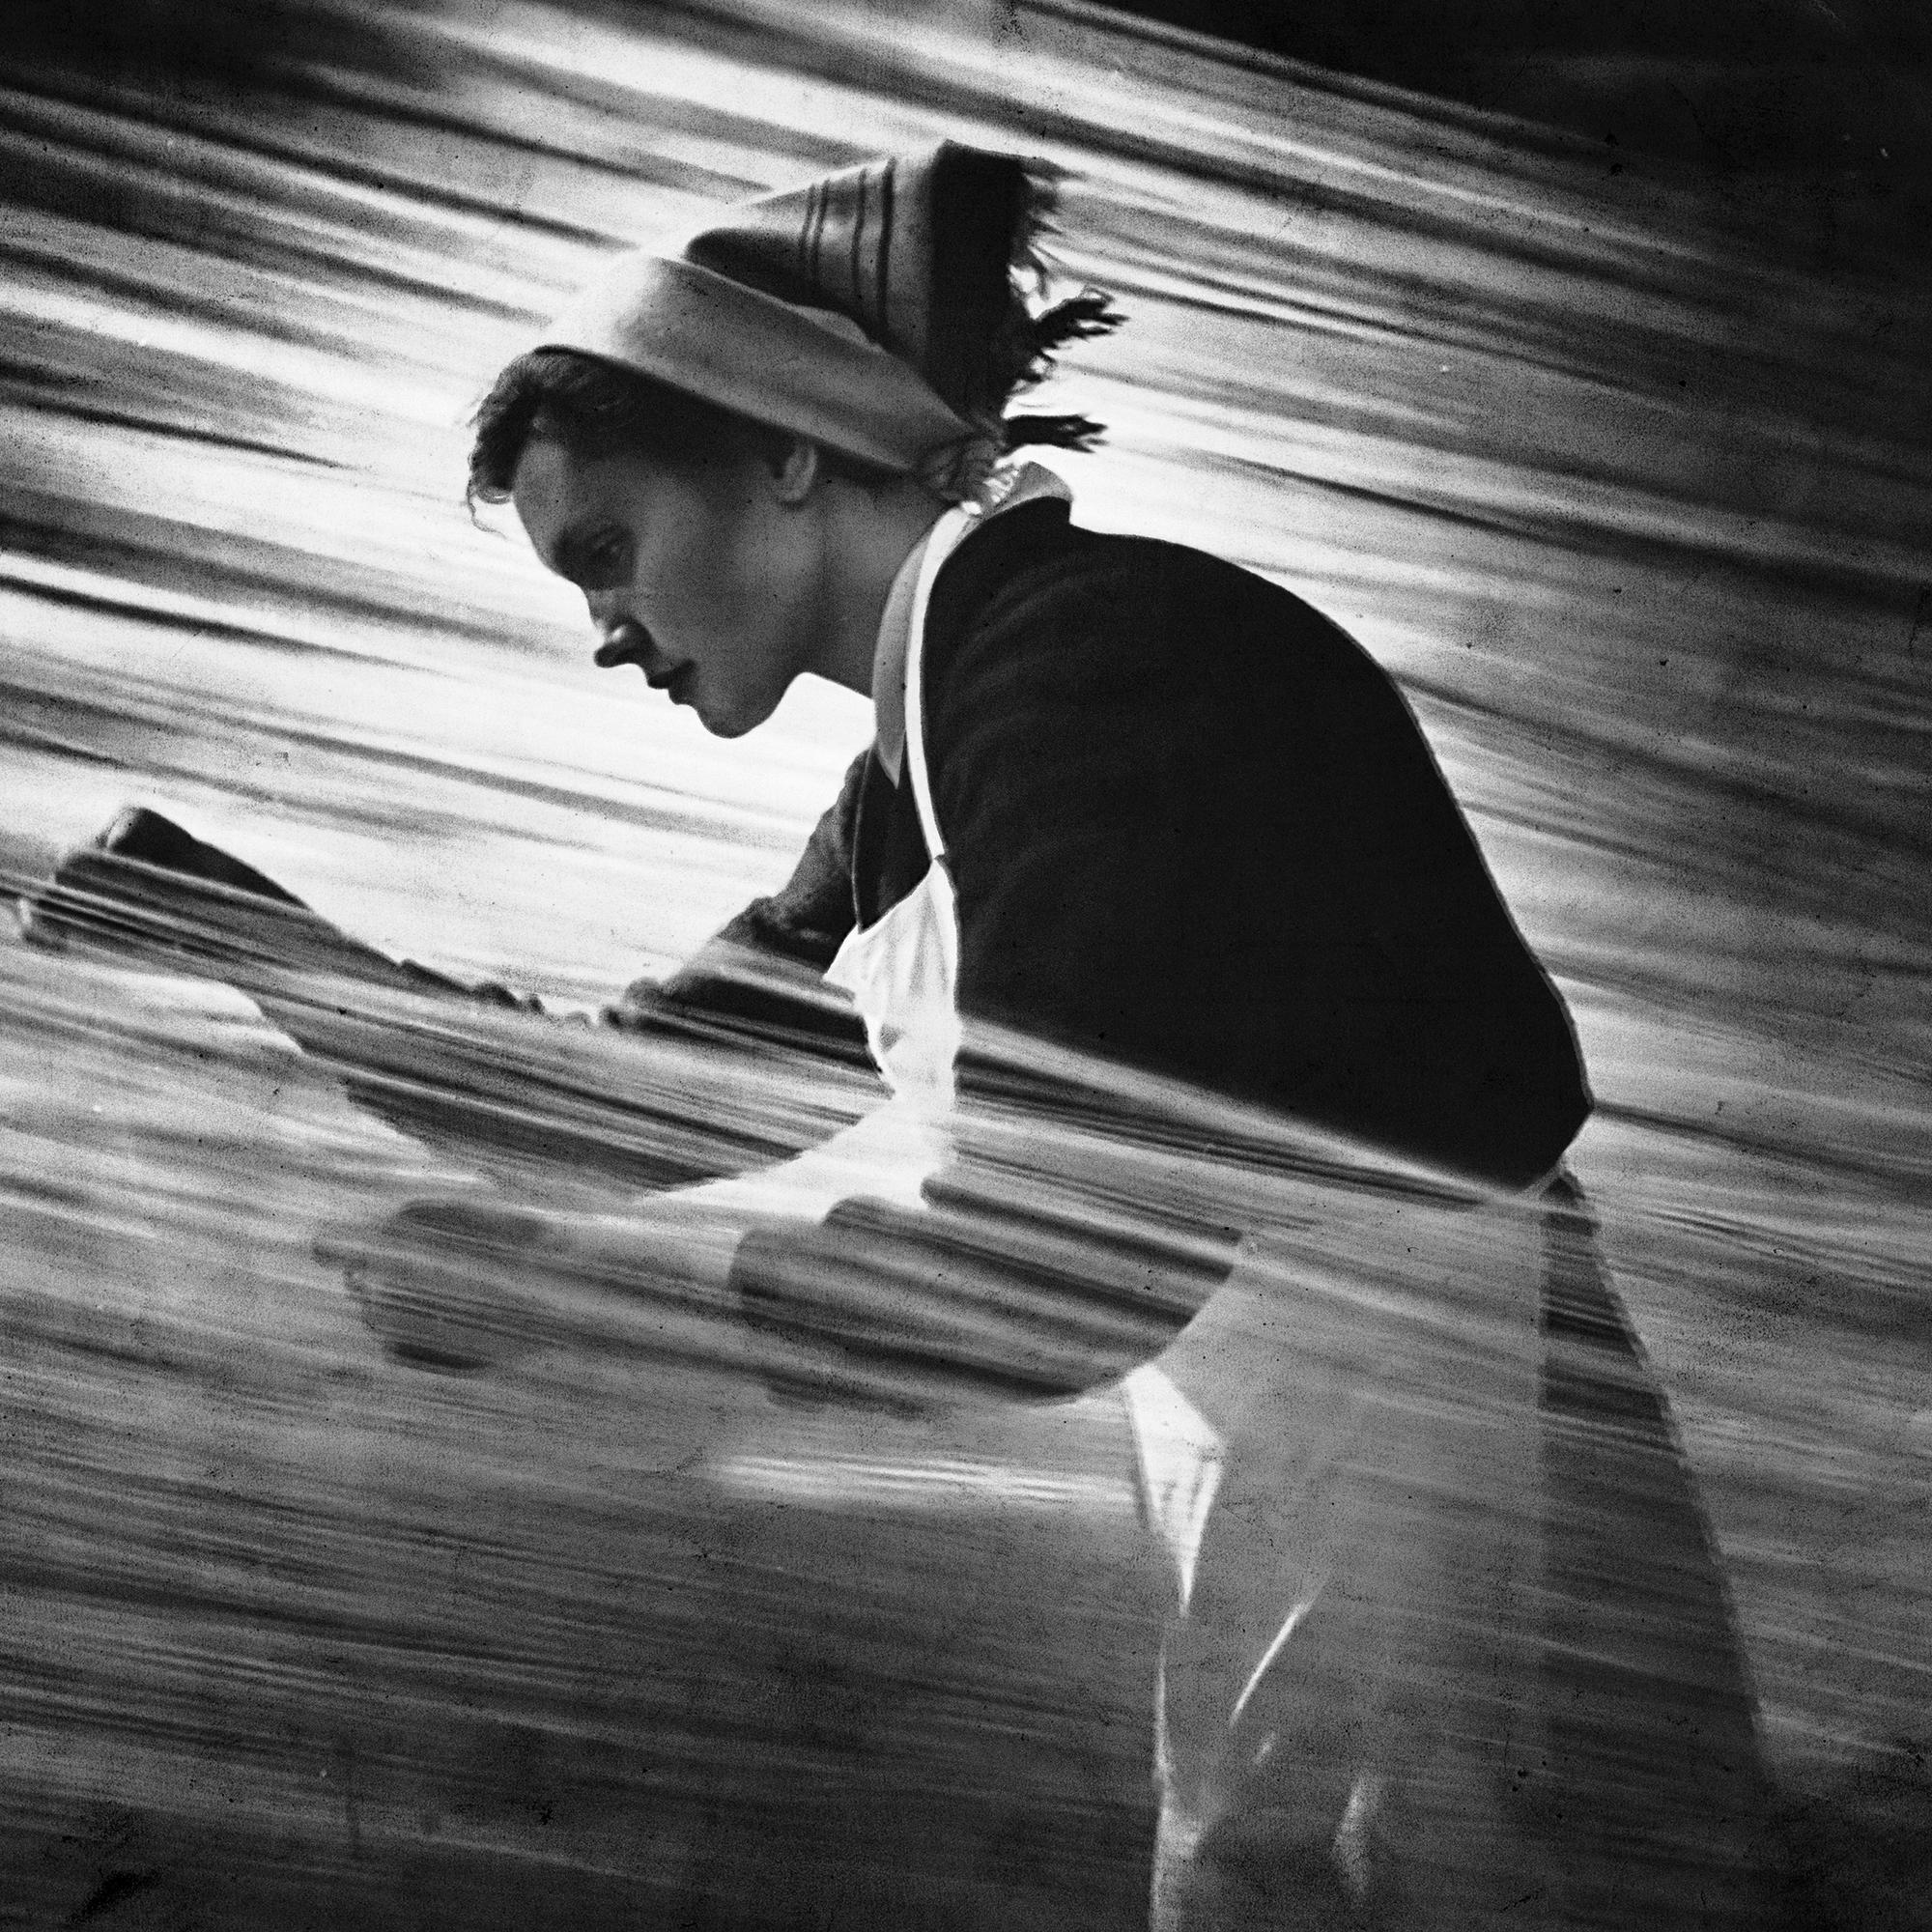 Jack White - - ENTERING (Vinyl) HEAVEN ALIVE